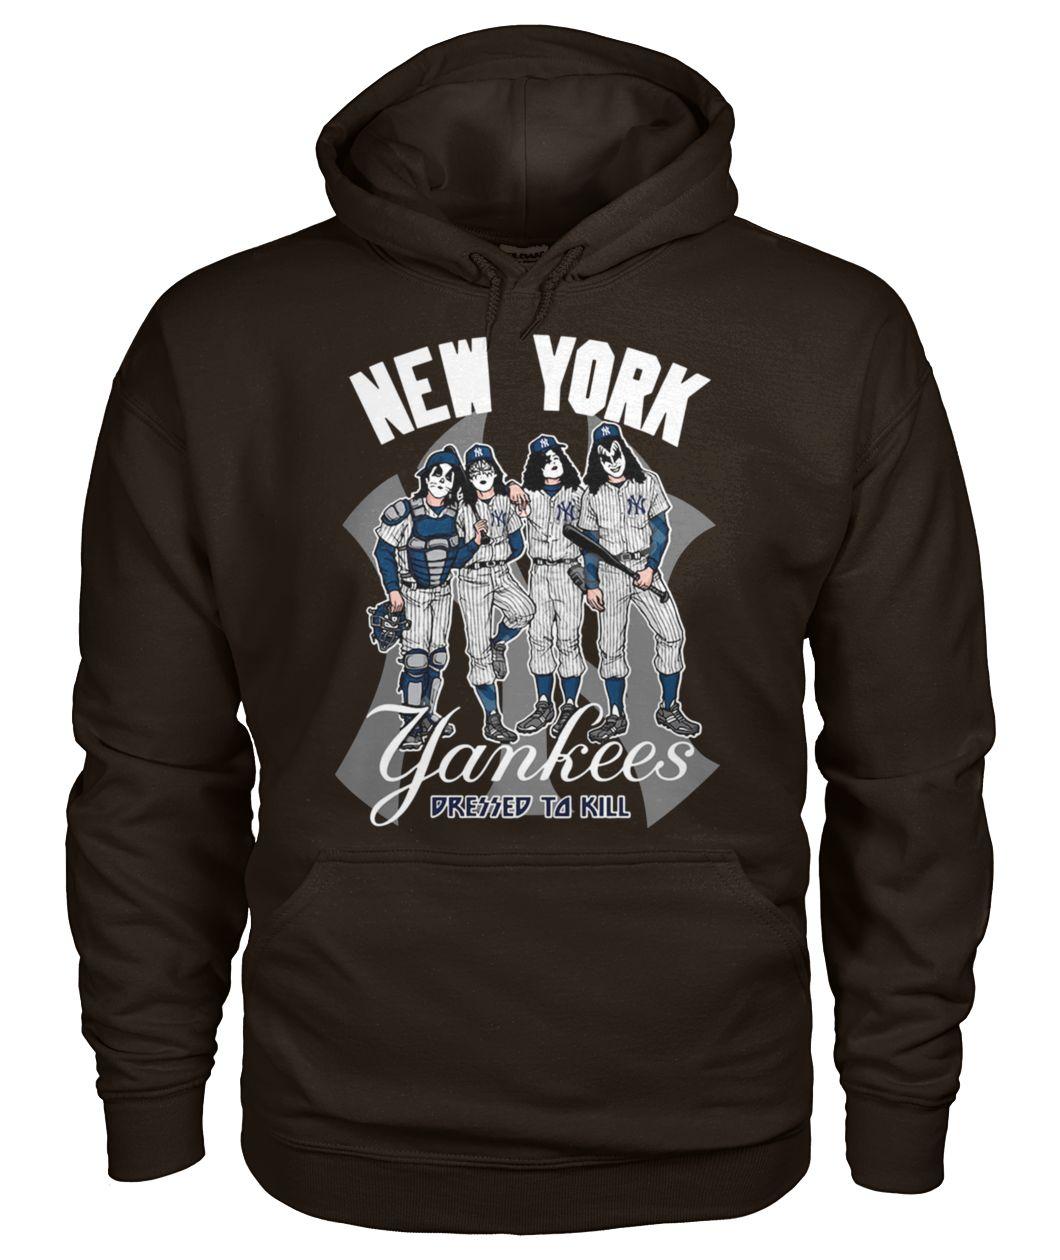 New york yankees dressed to kill kiss rock band hoodie